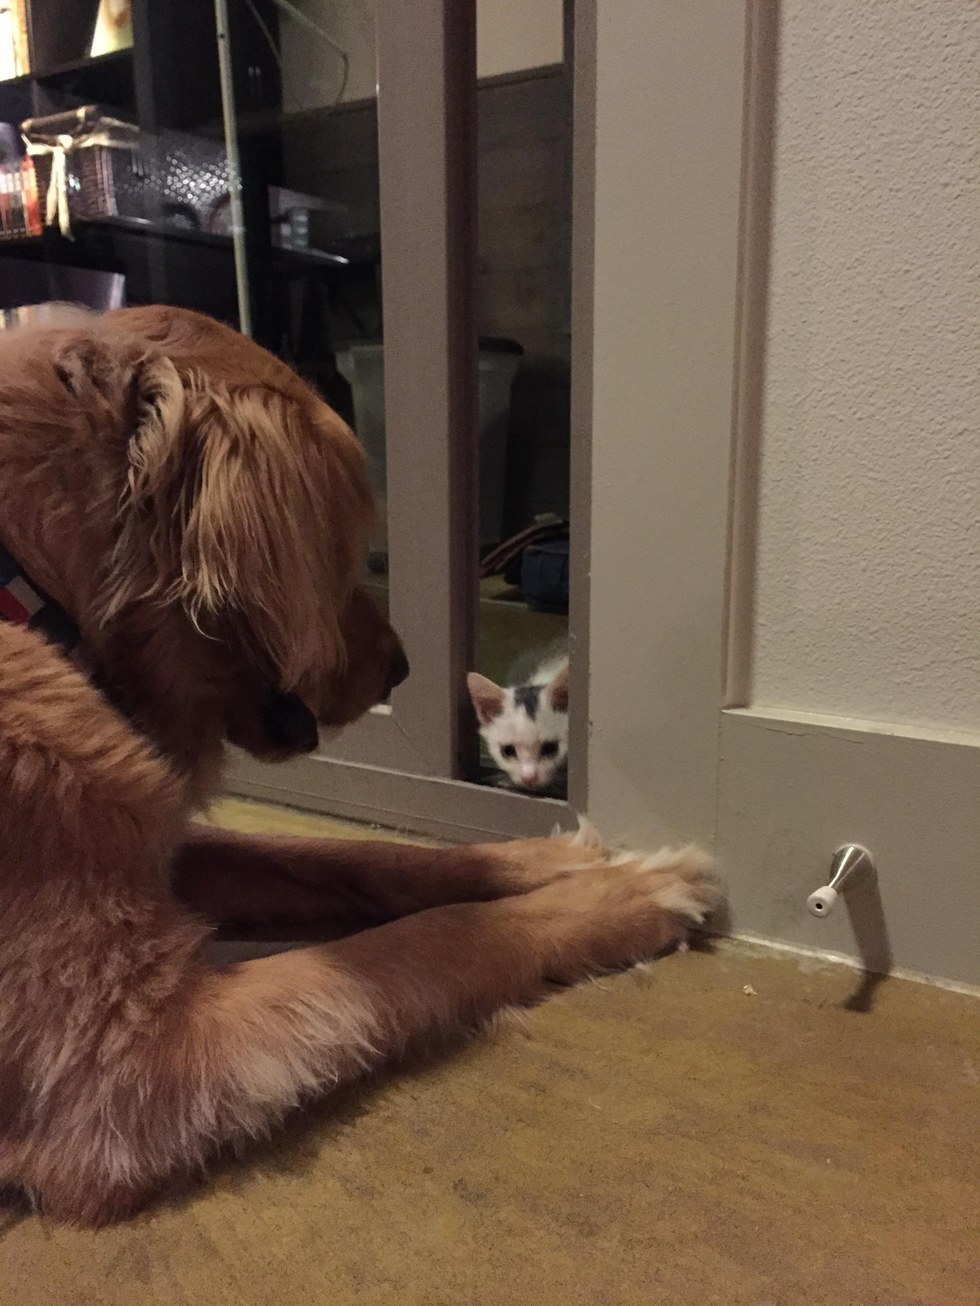 Kitten looking at dog through the crack in the door